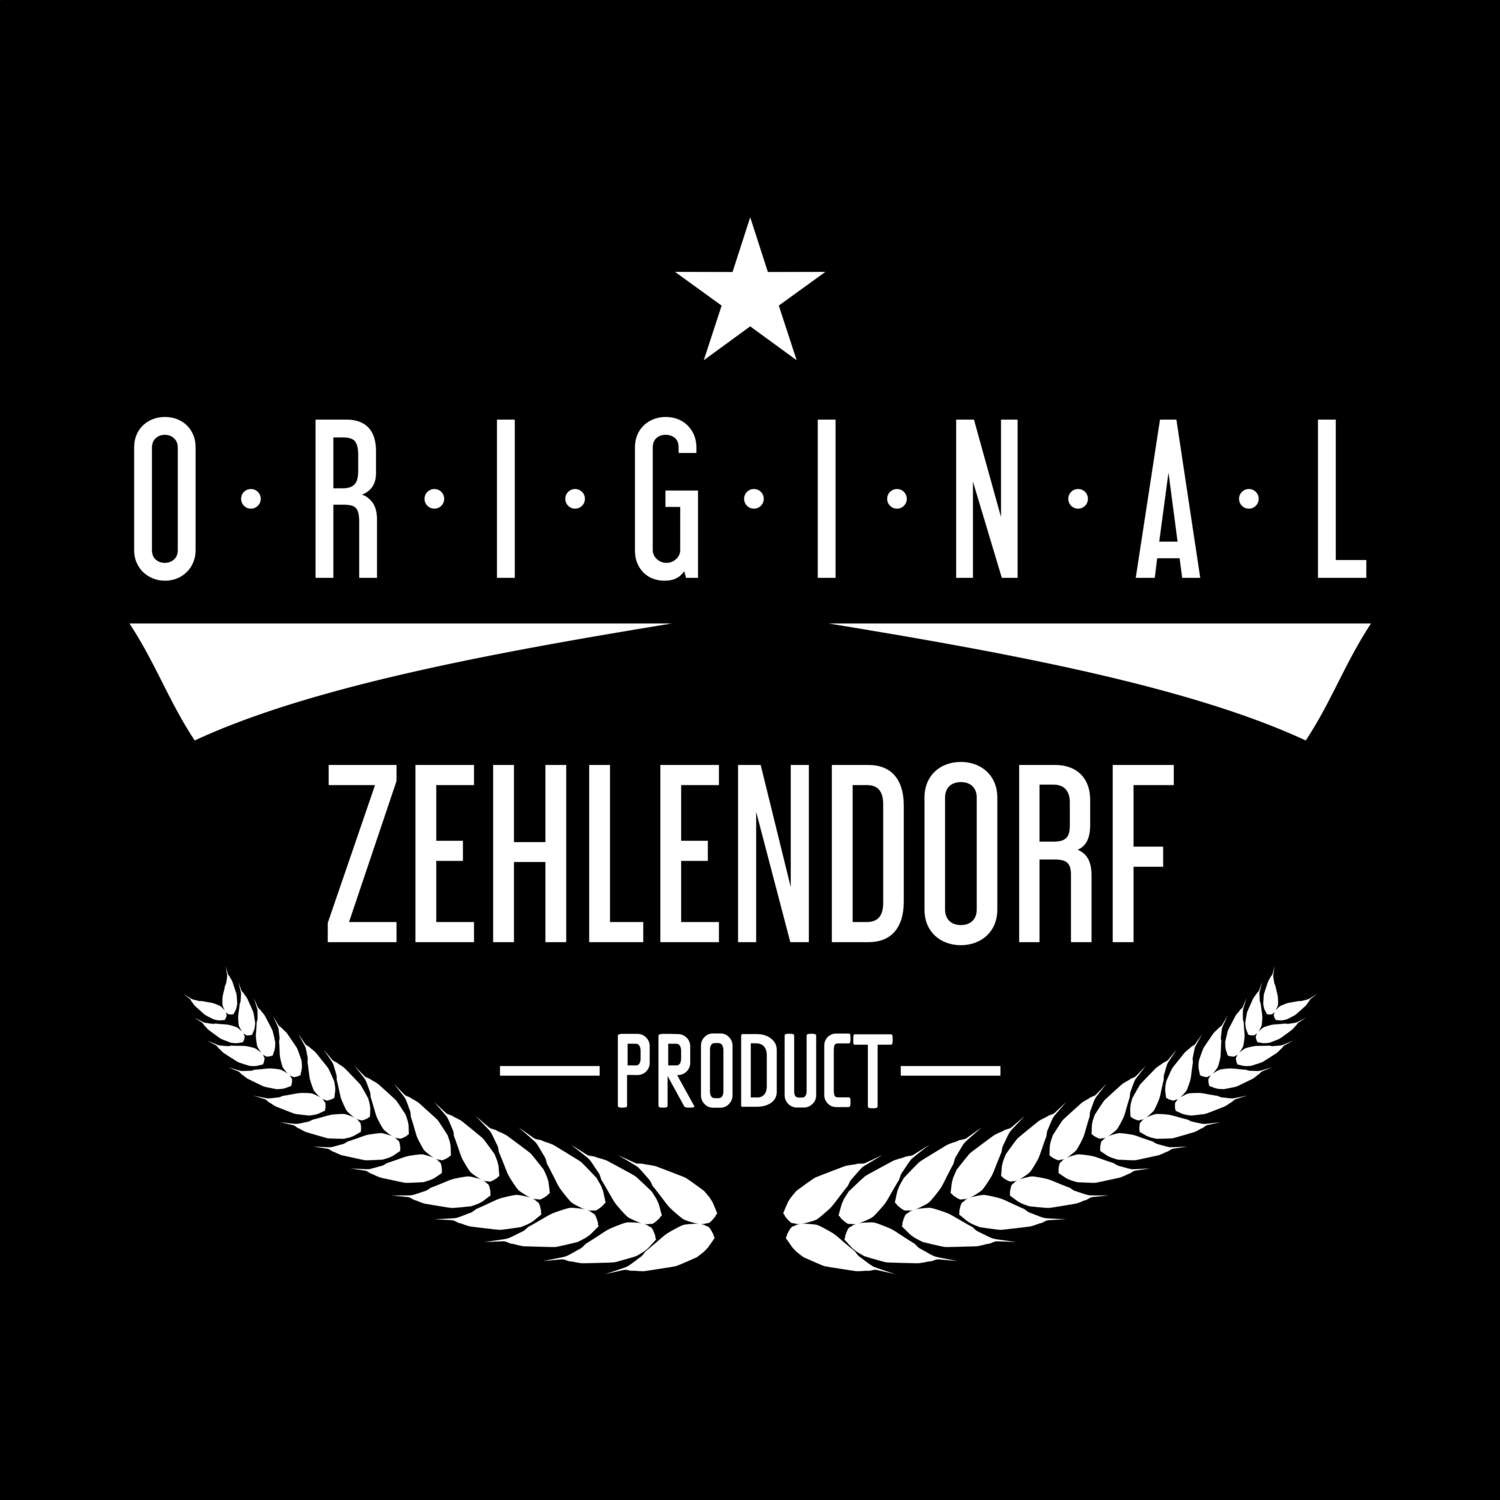 Zehlendorf T-Shirt »Original Product«